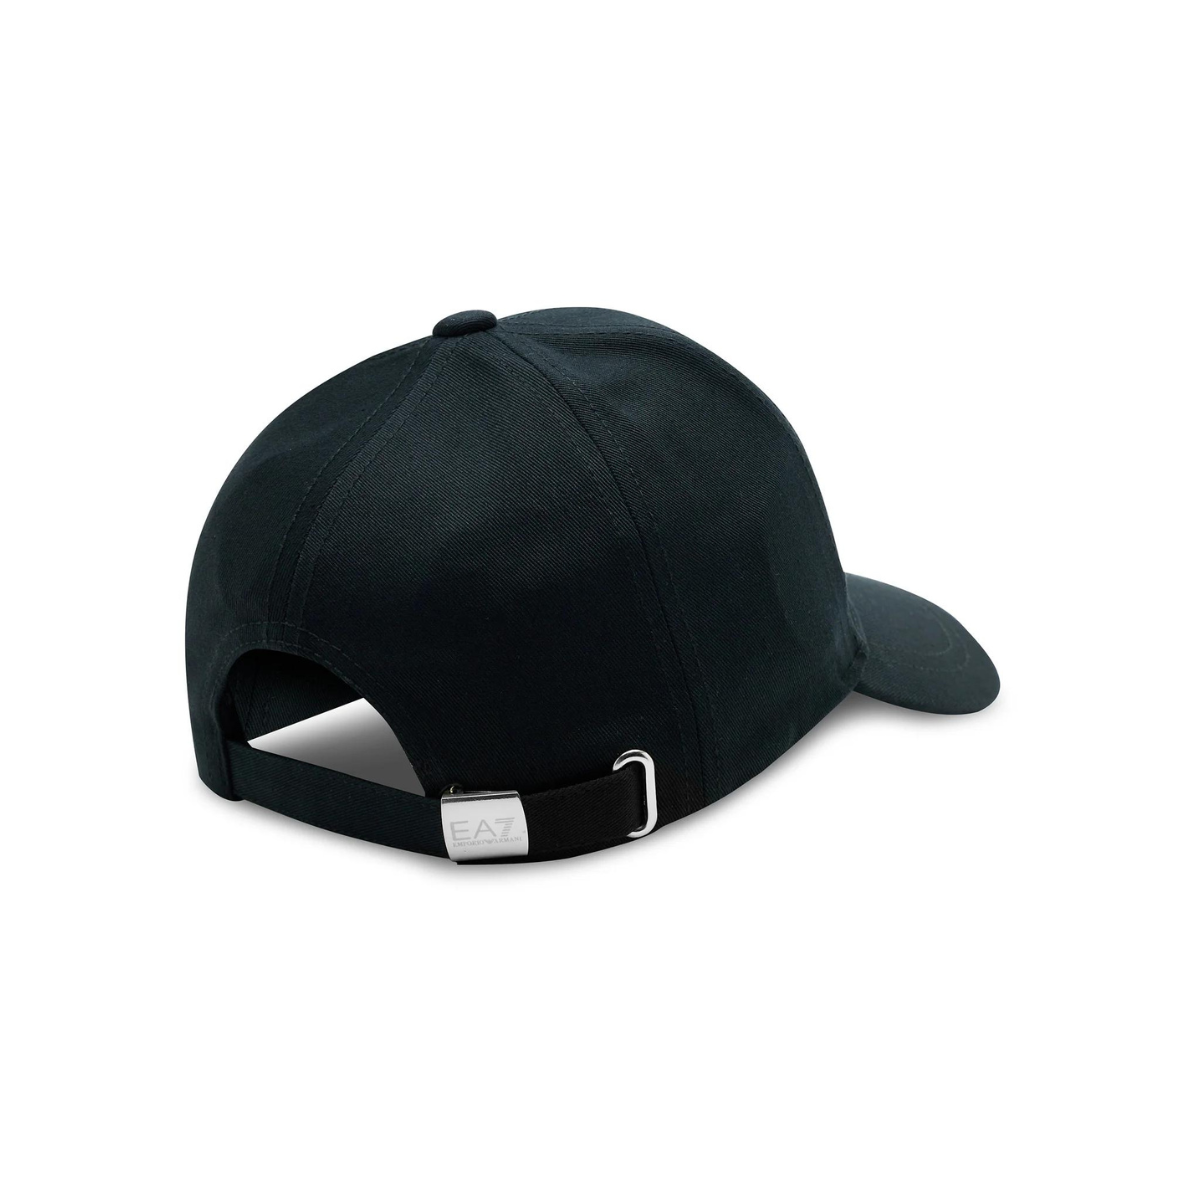 EA7 Giorgio Armani - Unisex Woven Baseball Hat - Black/Silver